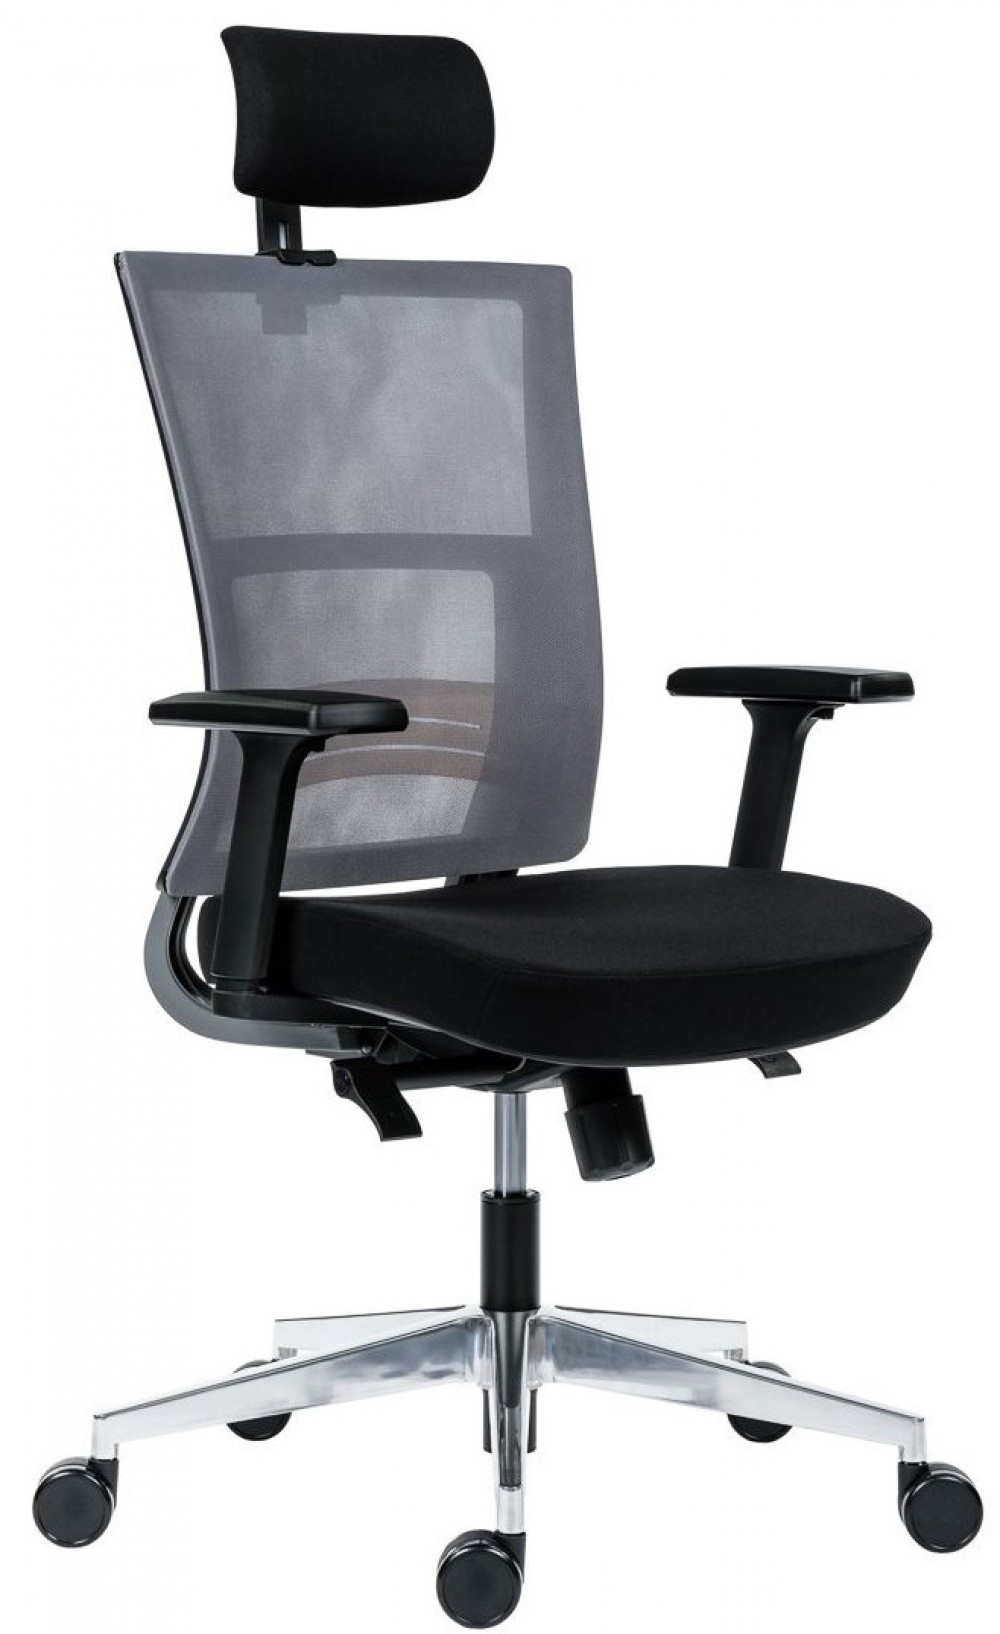 Next the chair. Кресло Antares. Кресло Antares офисное. Офисные стулья Antares. Кресло Некст.